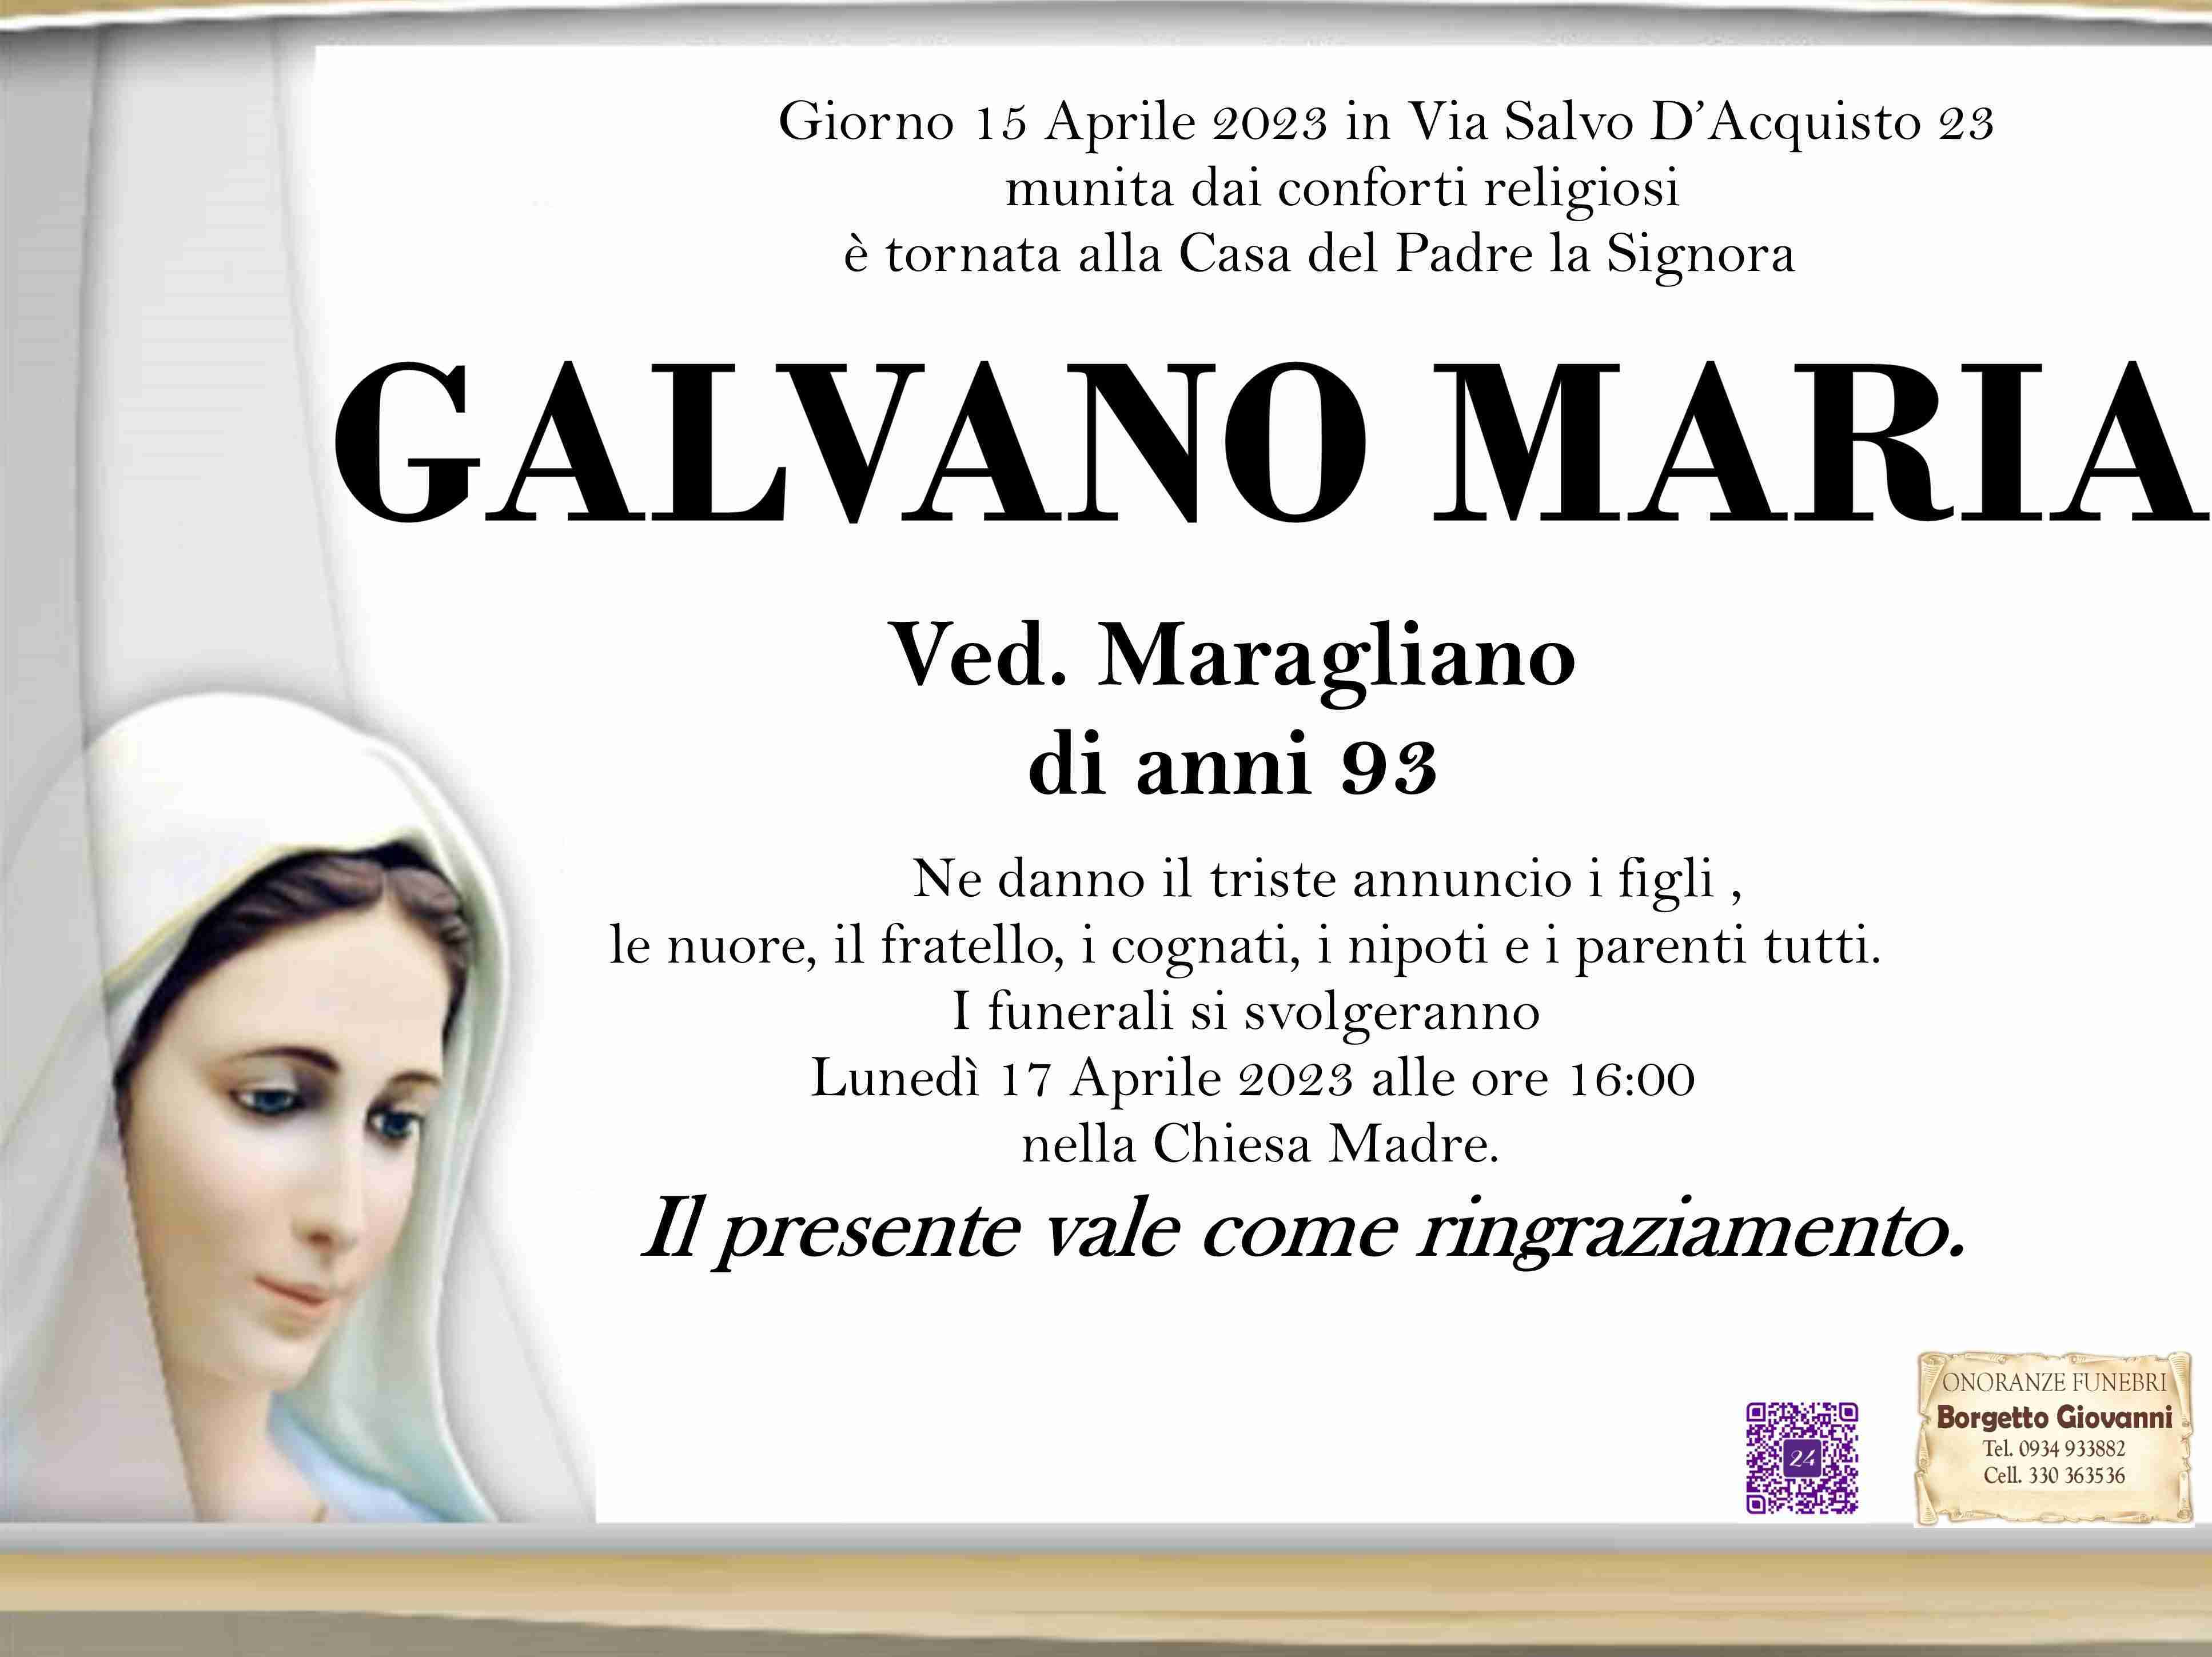 Maria Galvano